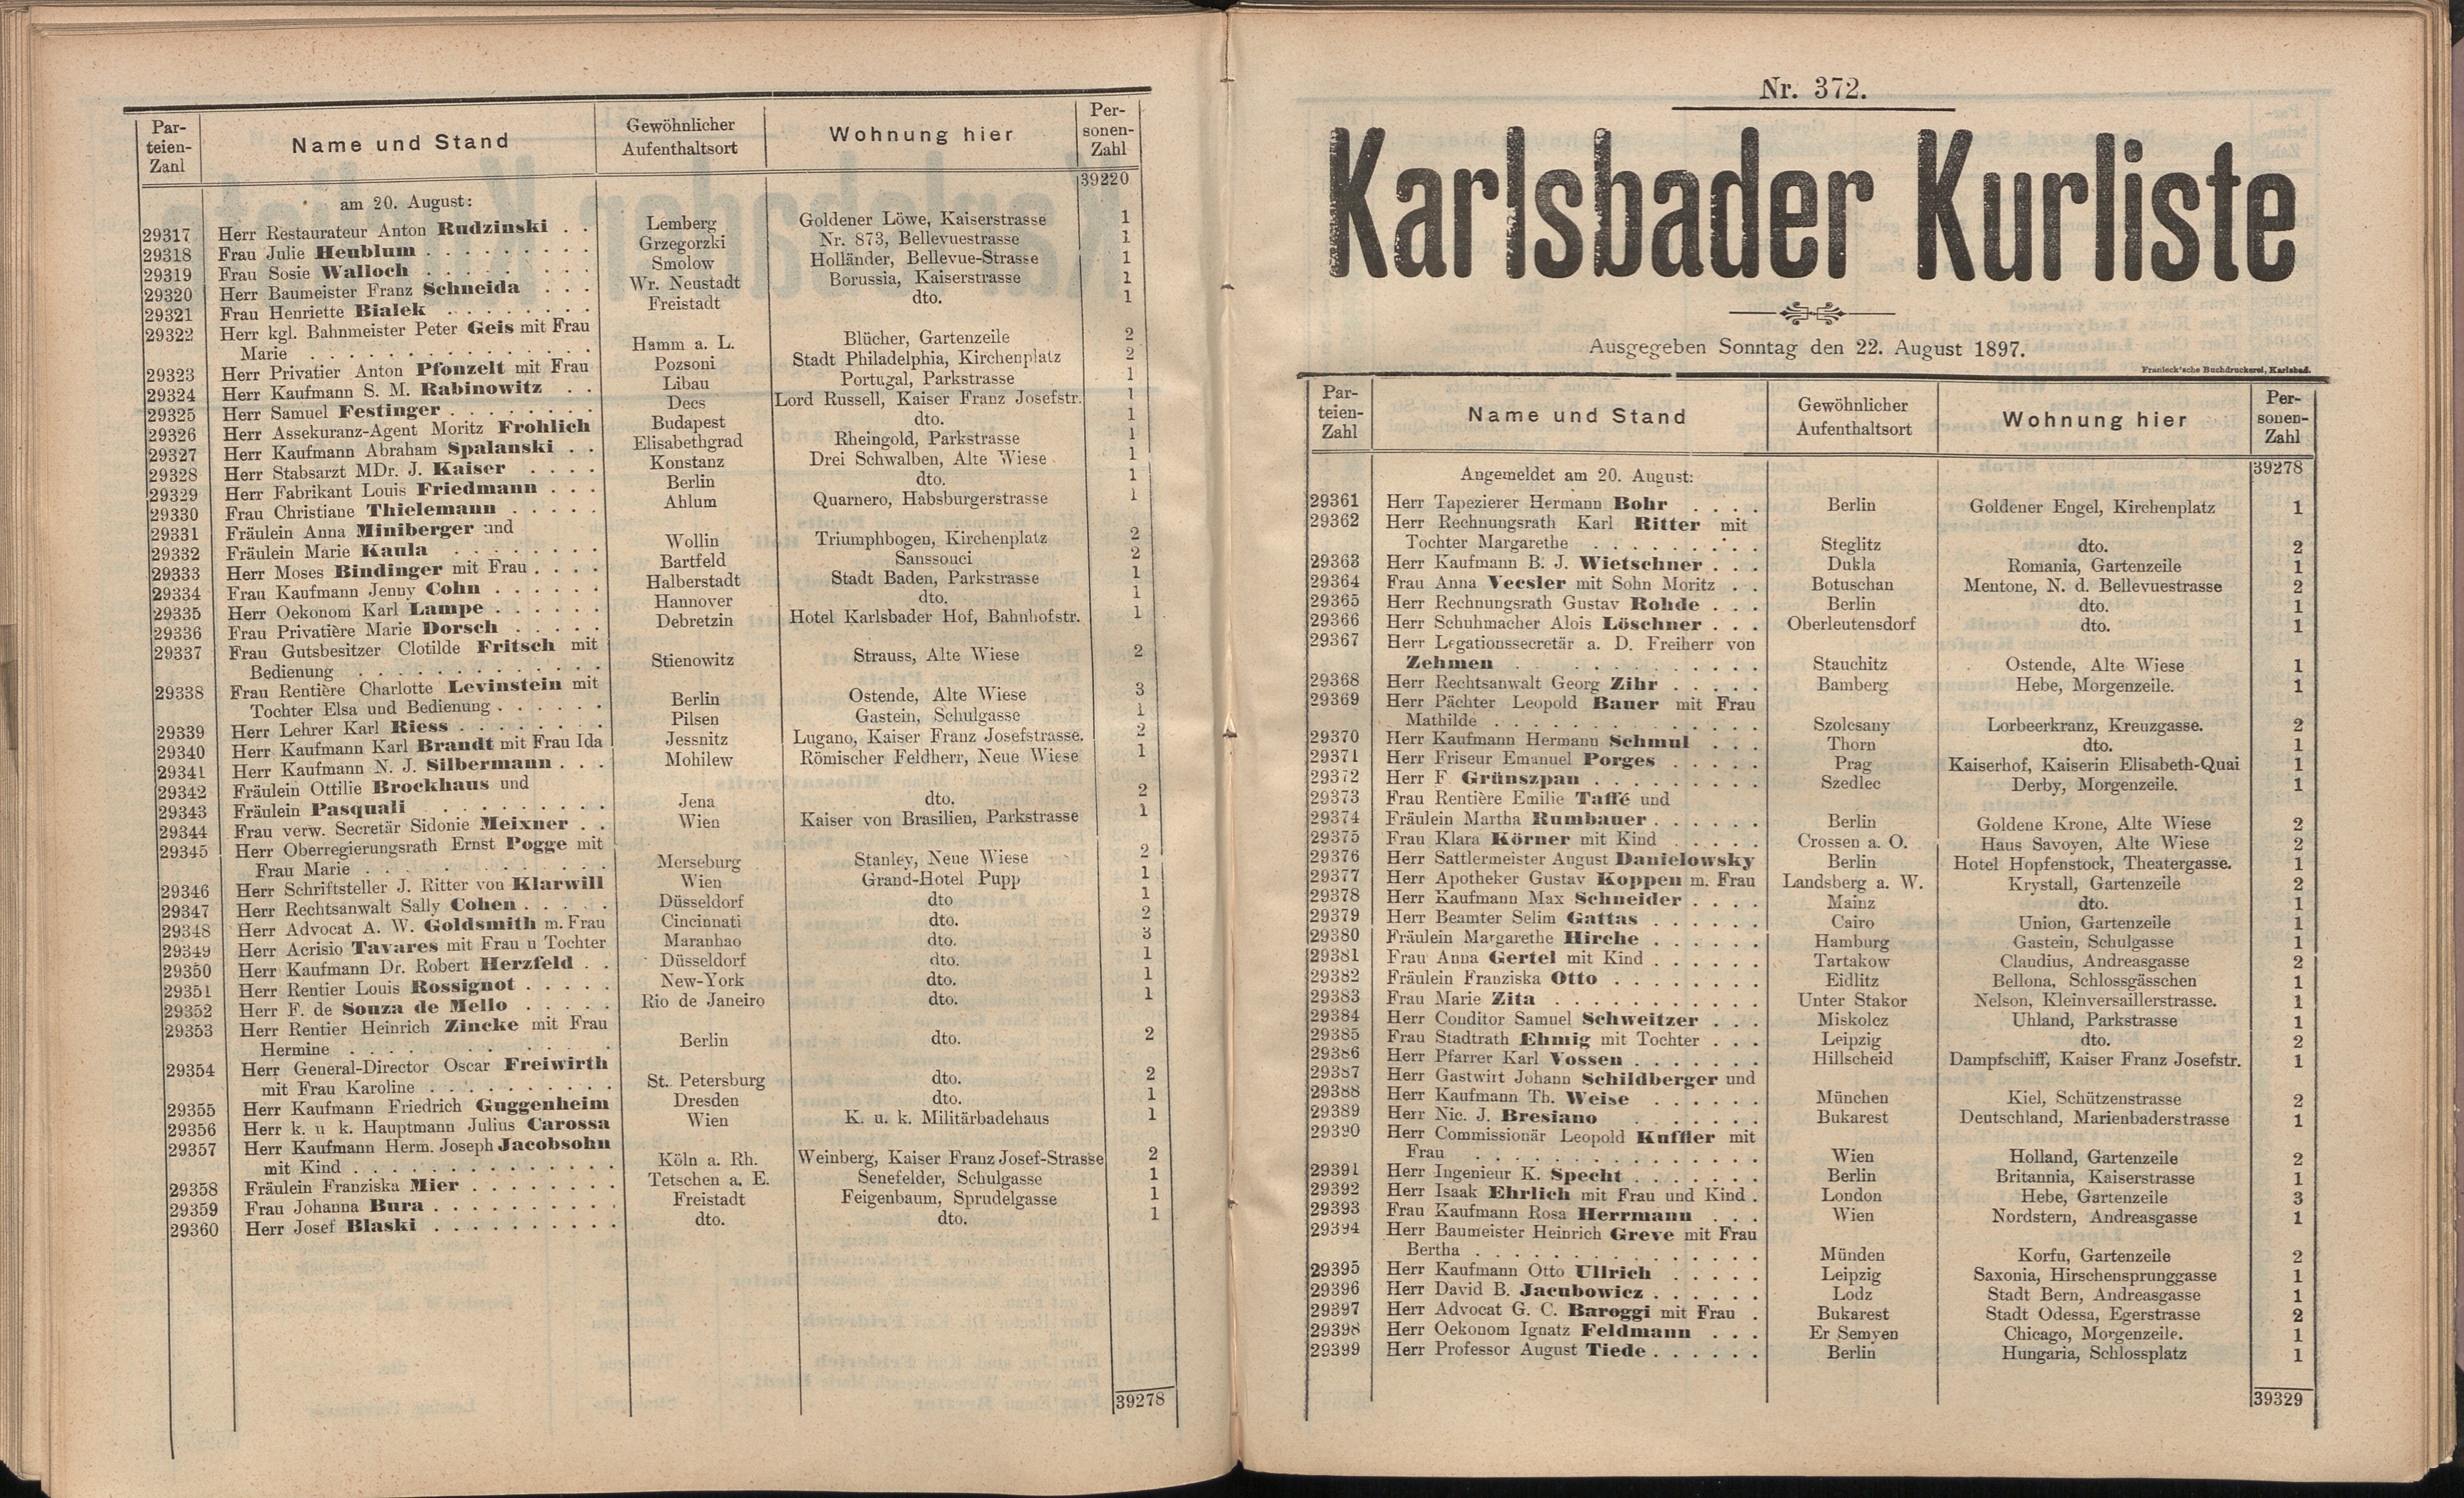 391. soap-kv_knihovna_karlsbader-kurliste-1897_3920